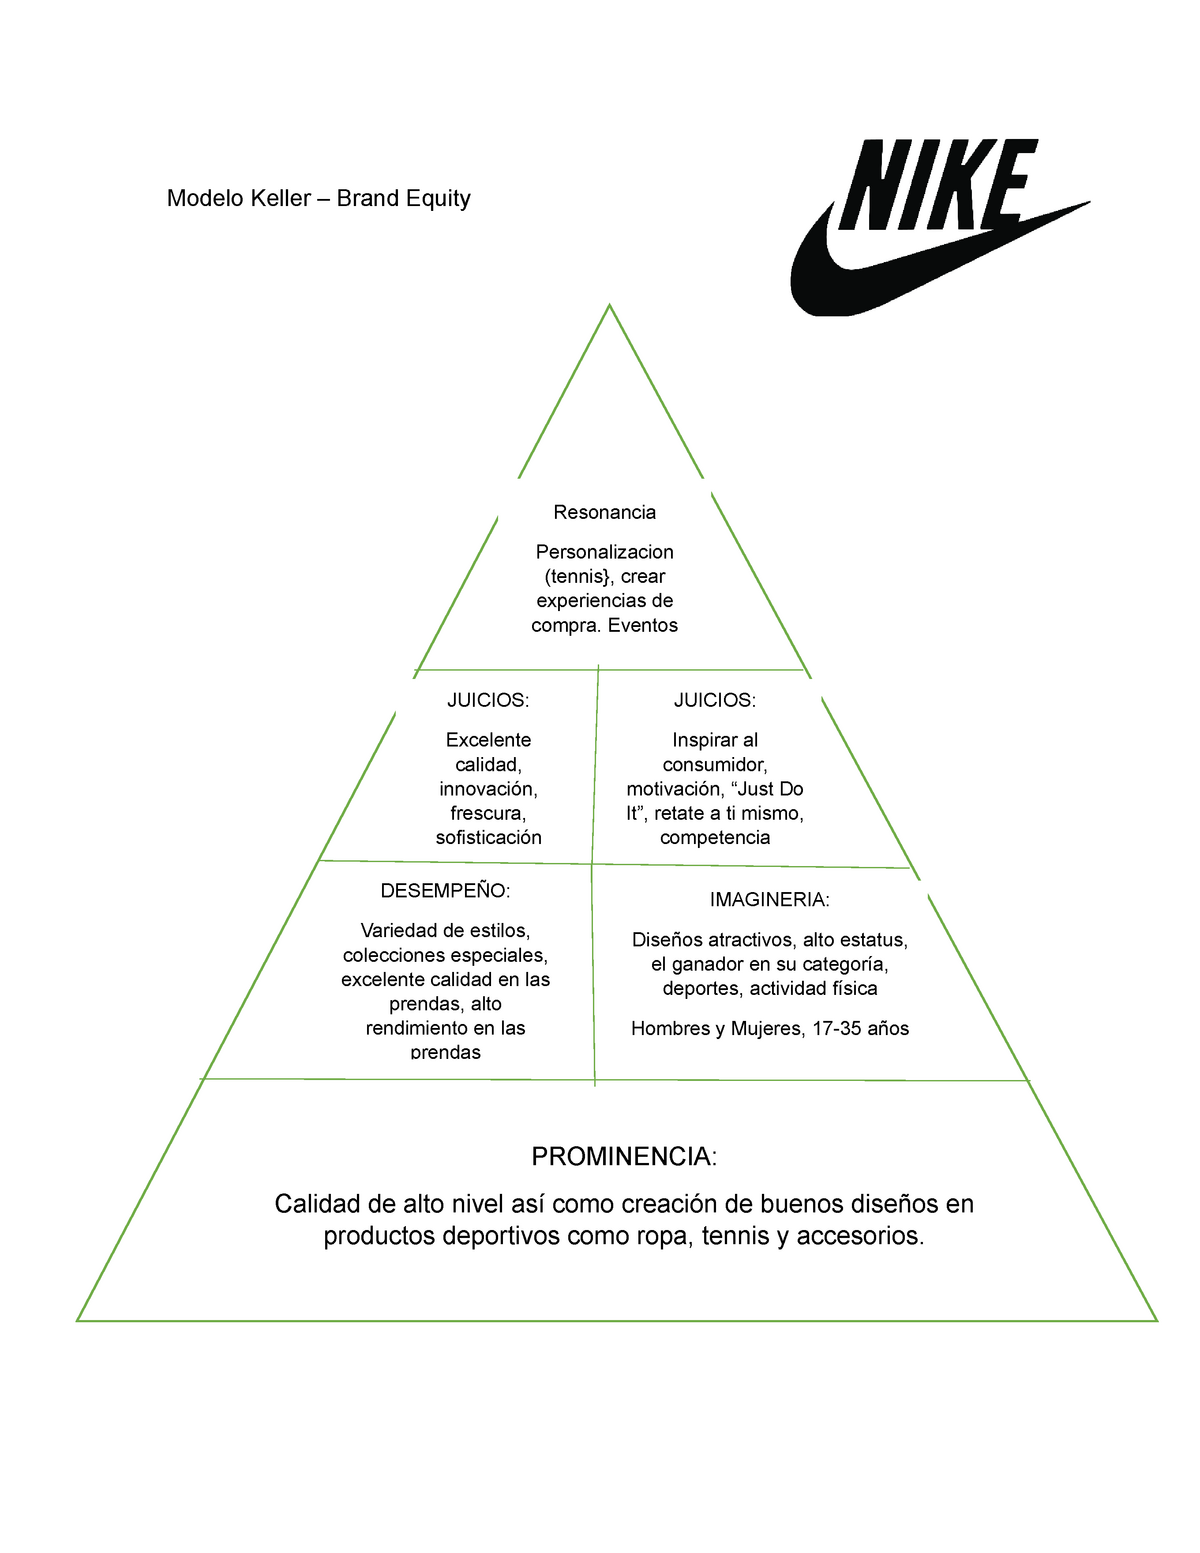 Brand equity nike - Keller Model About Nike - Modelo Keller – Brand Equity  Resonancia - Studocu